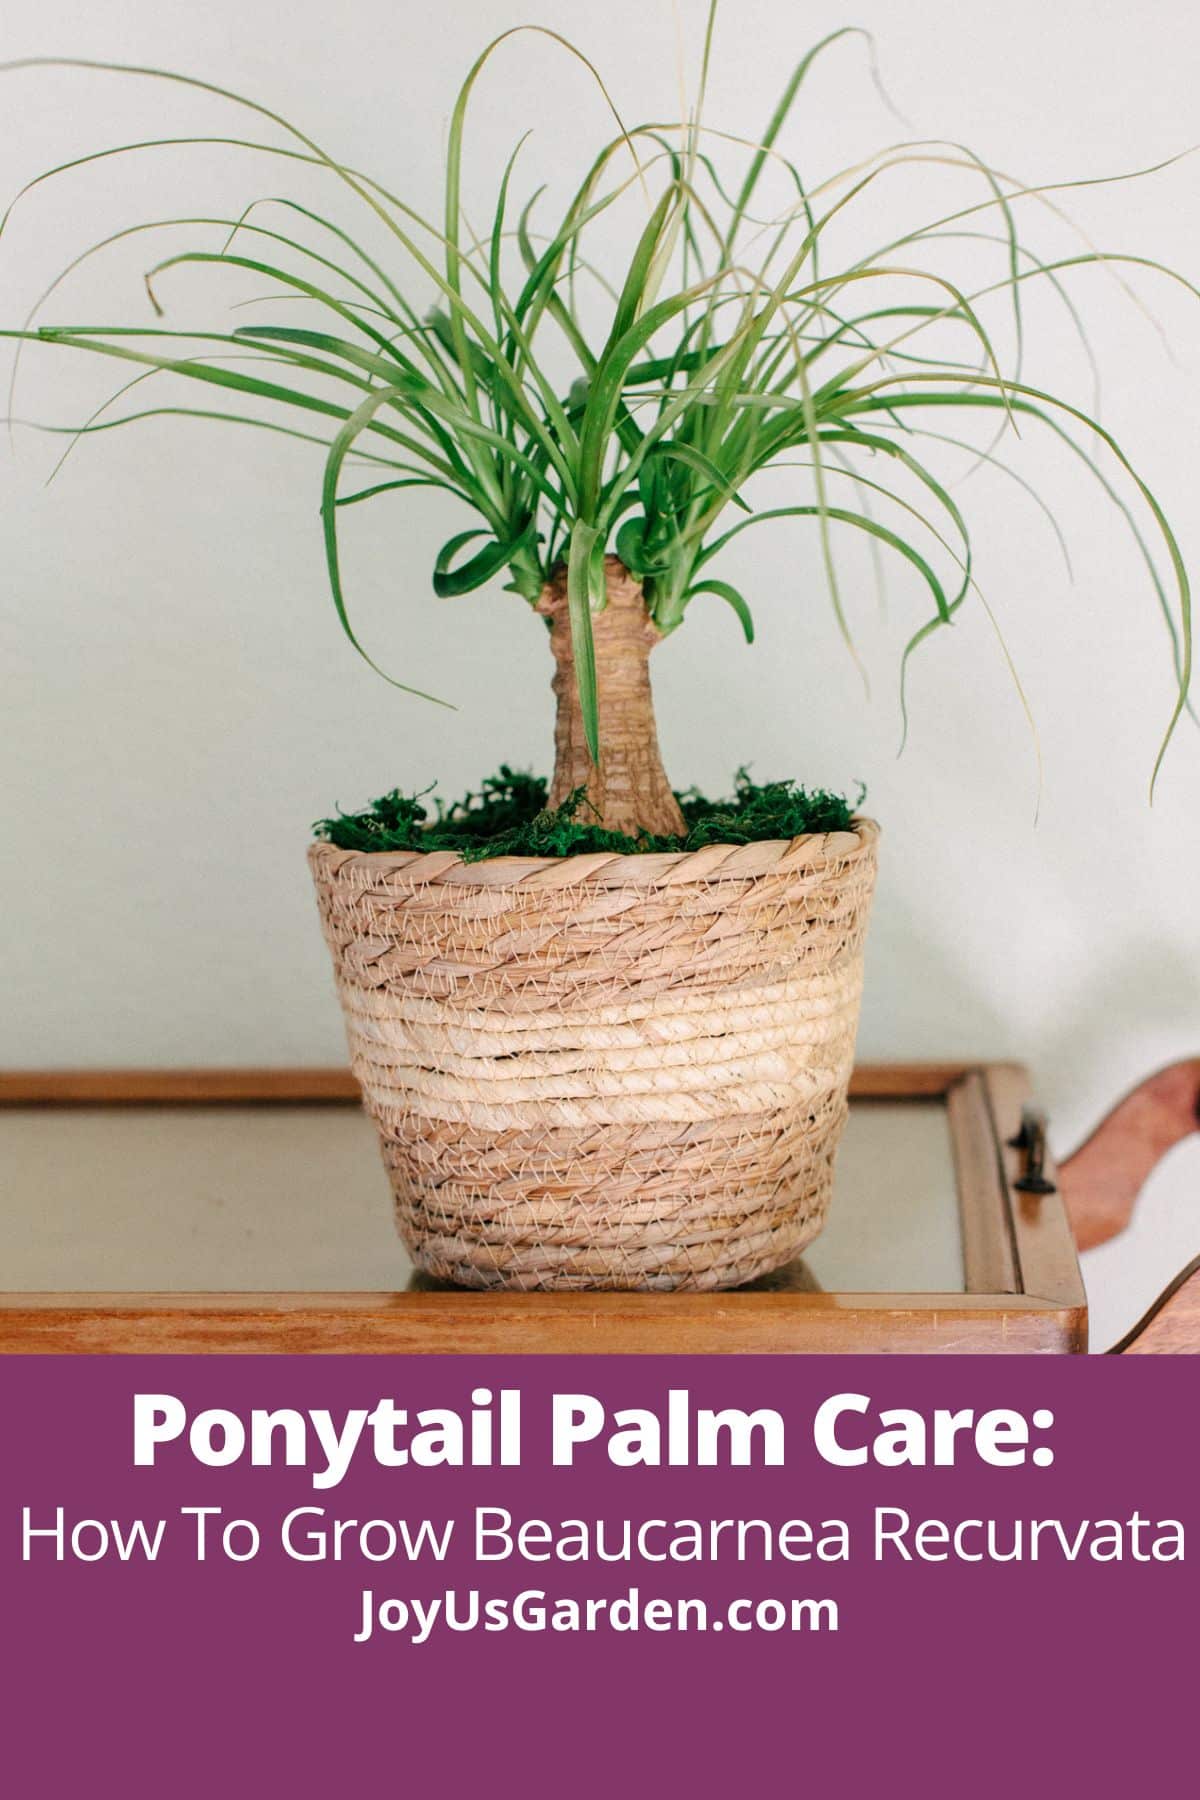  Ponytail Palm Care: Kuinka kasvattaa Beaucarnea Recurvata -kasvia?